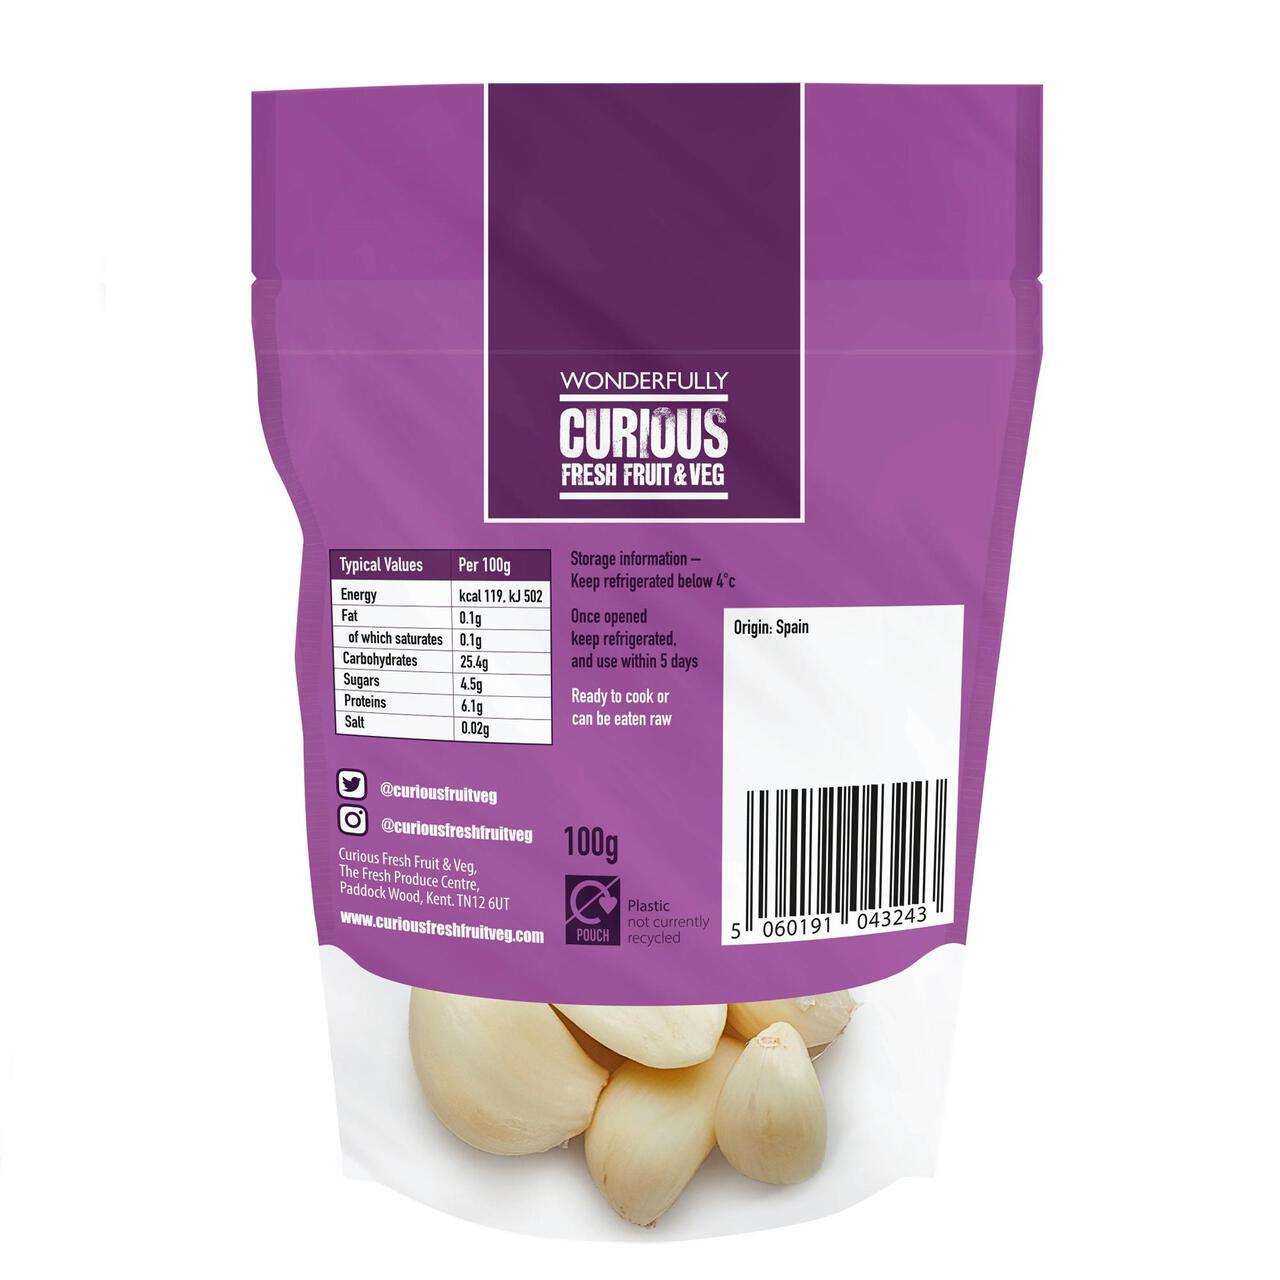 Wonderfully Curious Peeled Garlic 100g